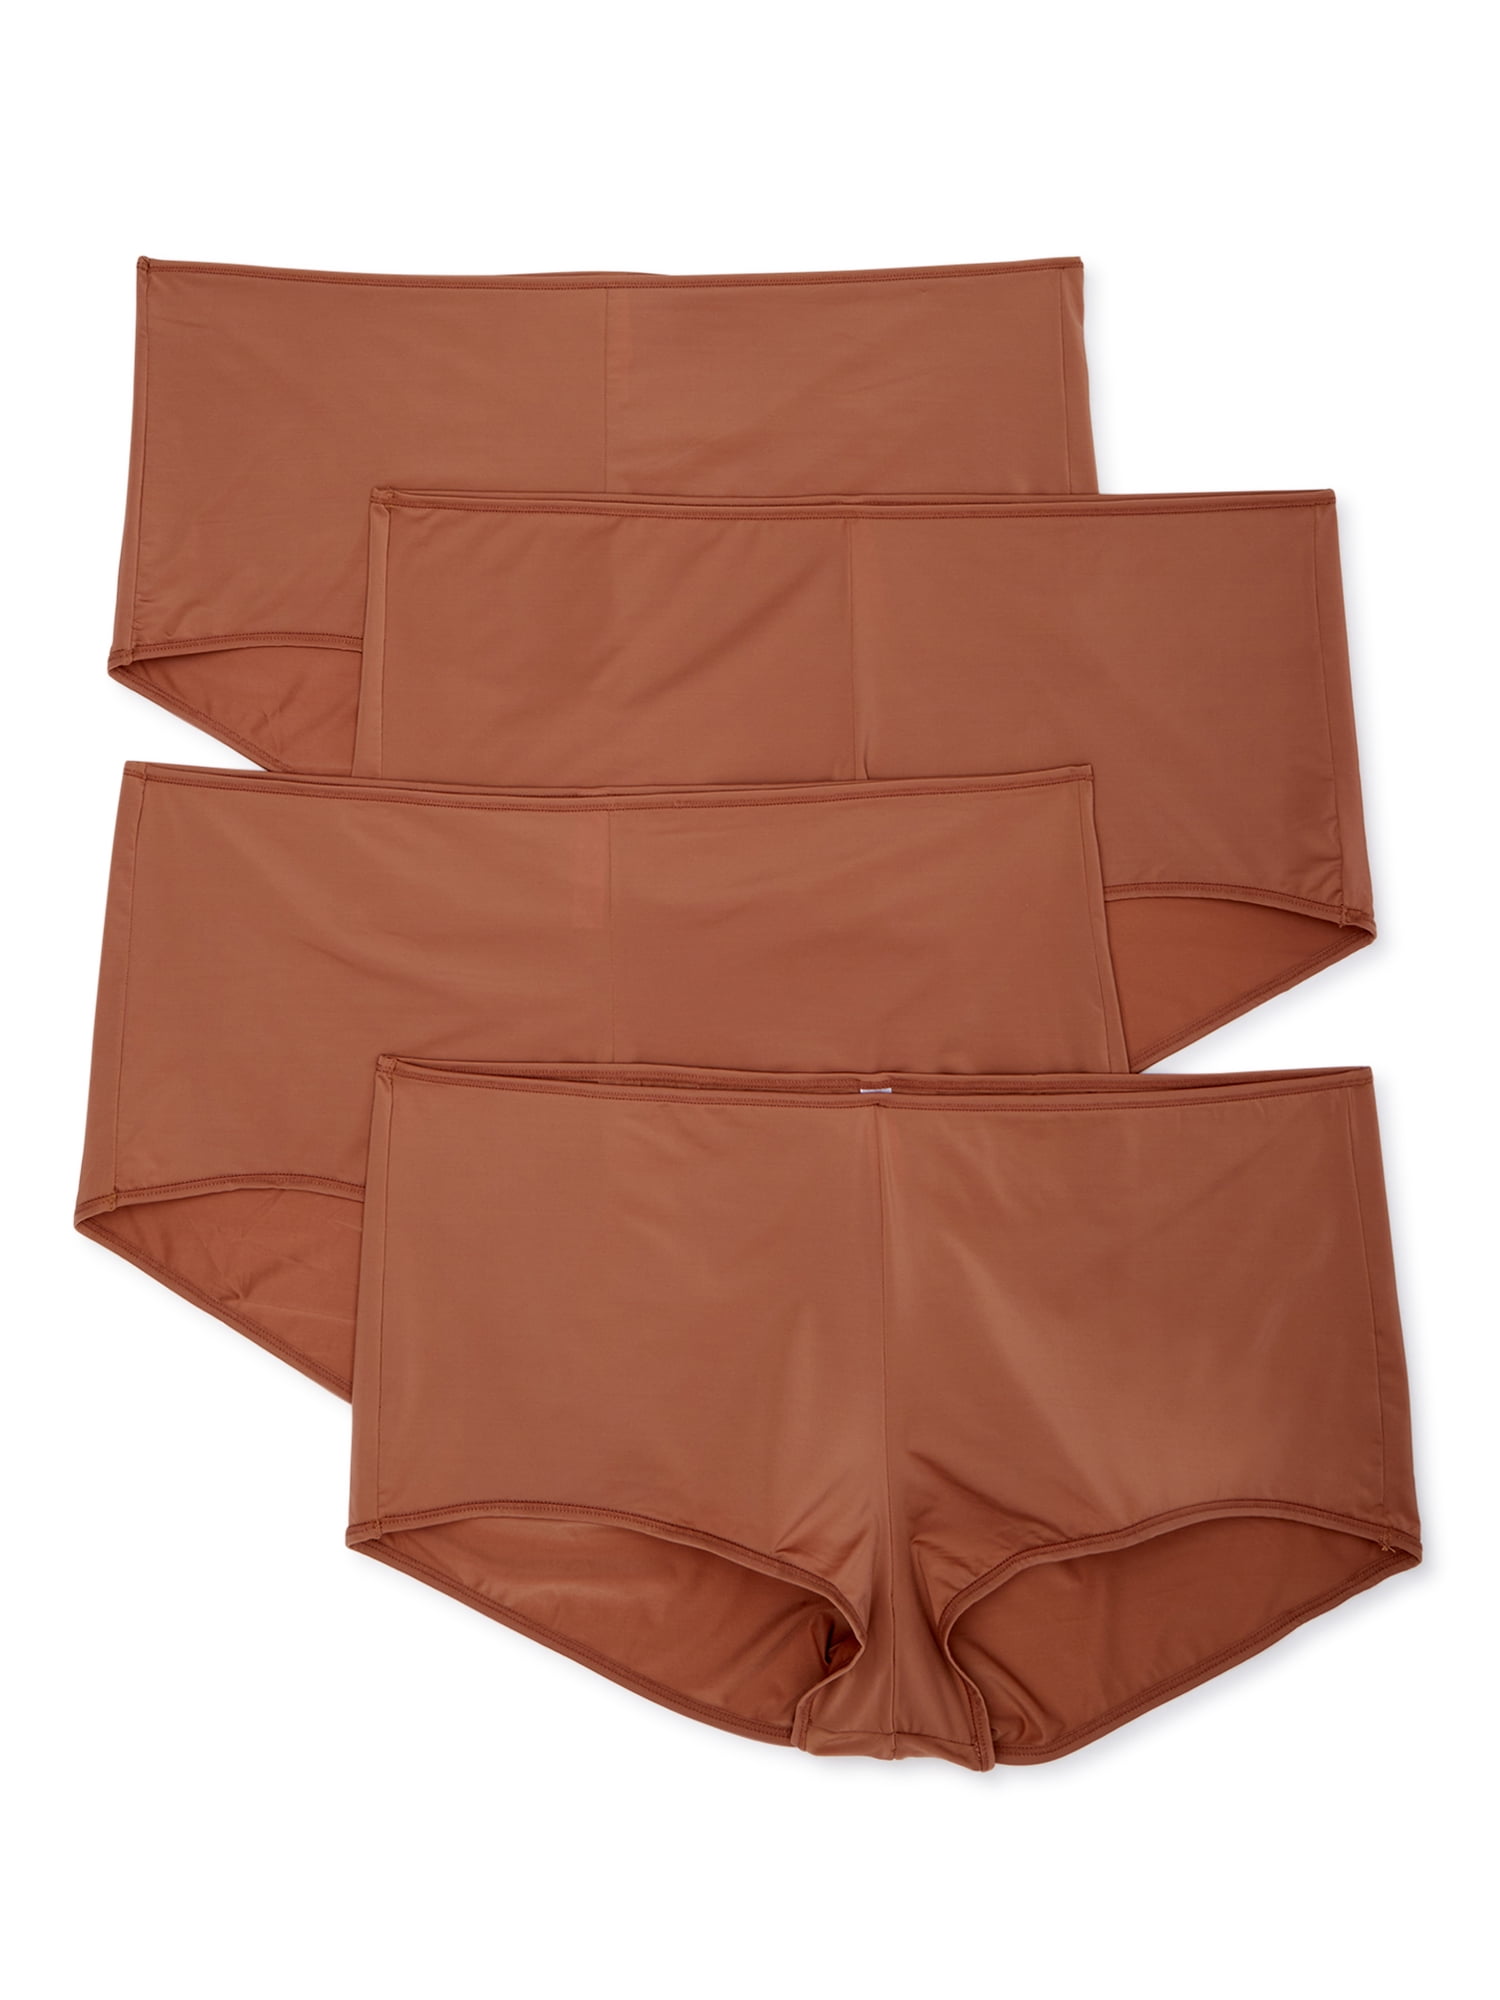 Undies.com Women's Classic Microfiber Boyshort Panties, 4-Pack